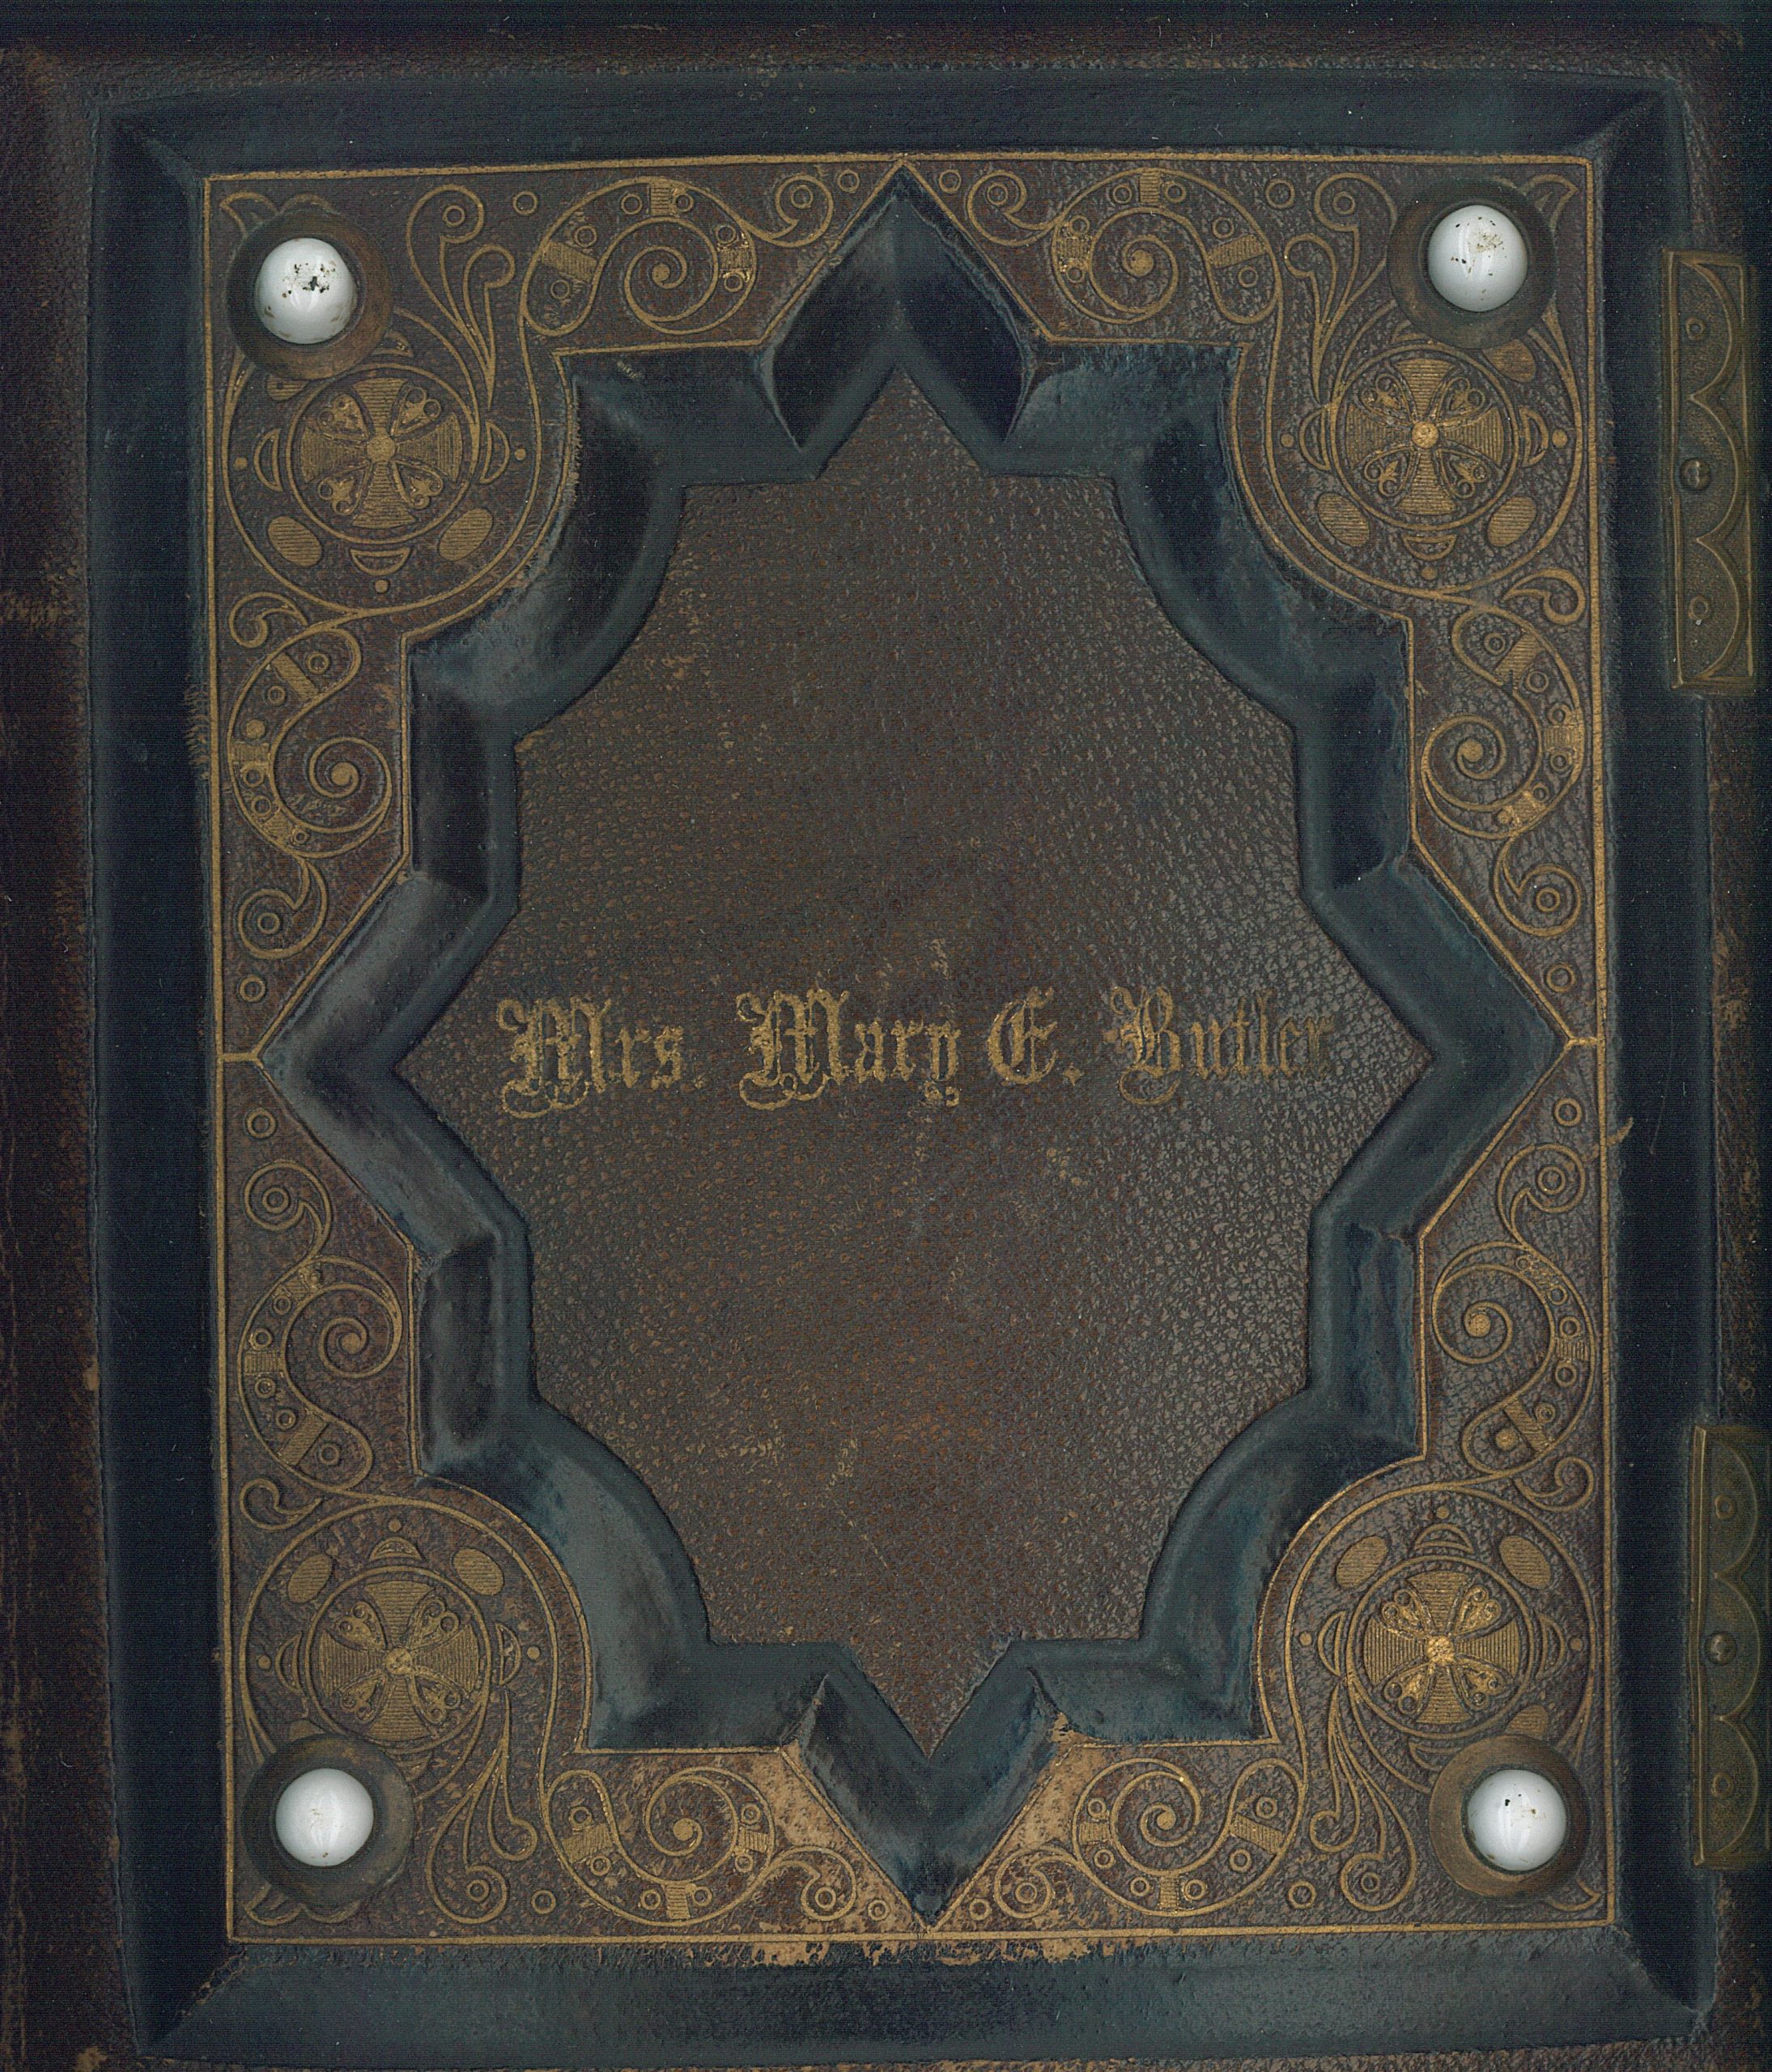 Mary E. Butler's photo album, MCHS collections, #1996.34.2.